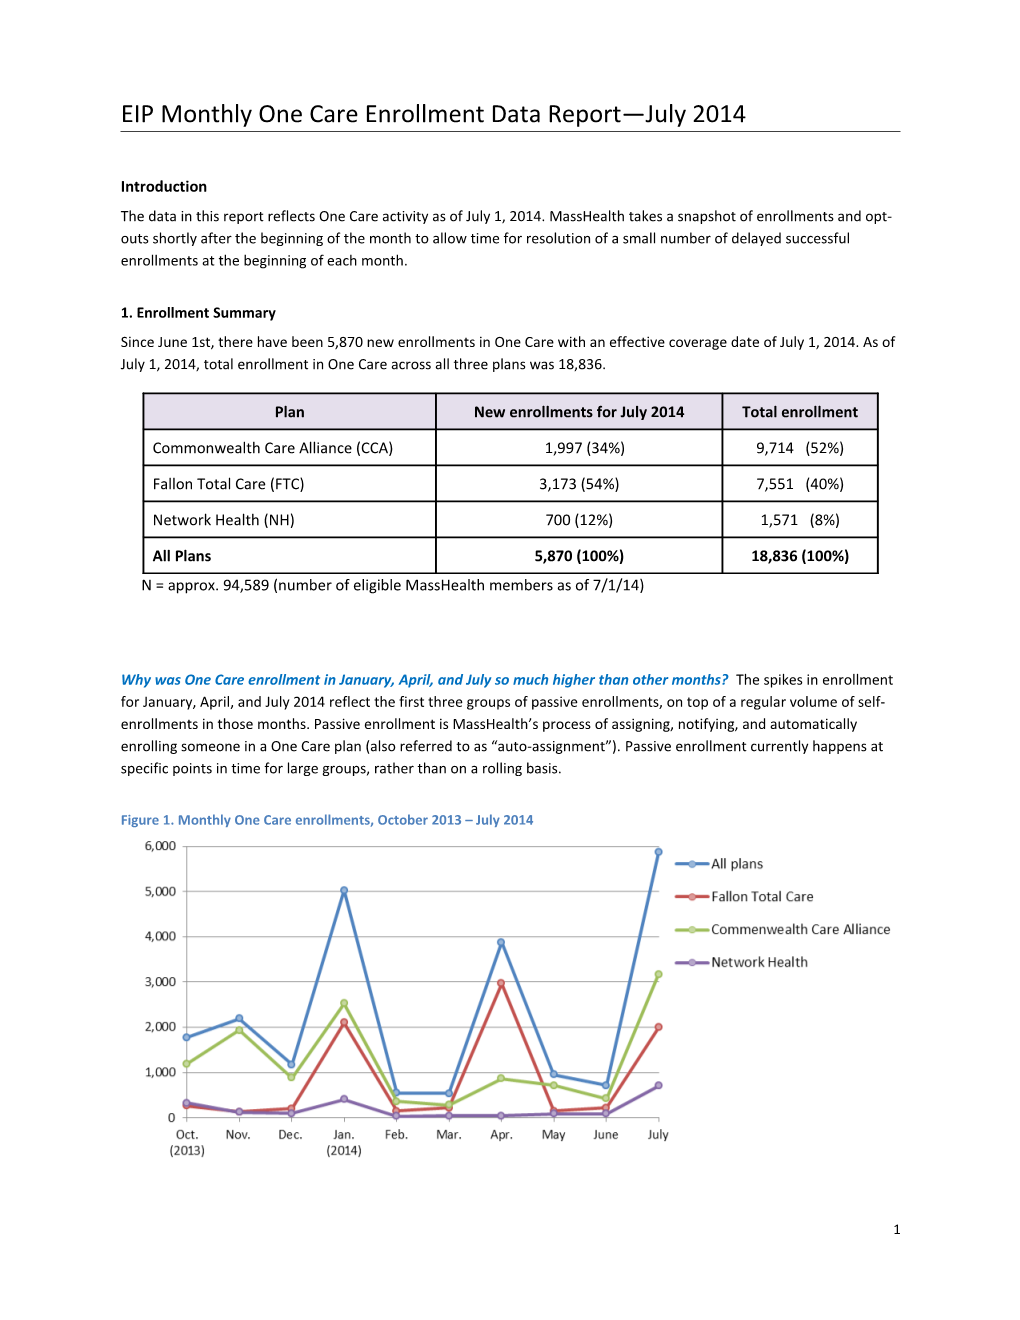 EIP Monthly One Care Enrollment Data Report November 2013